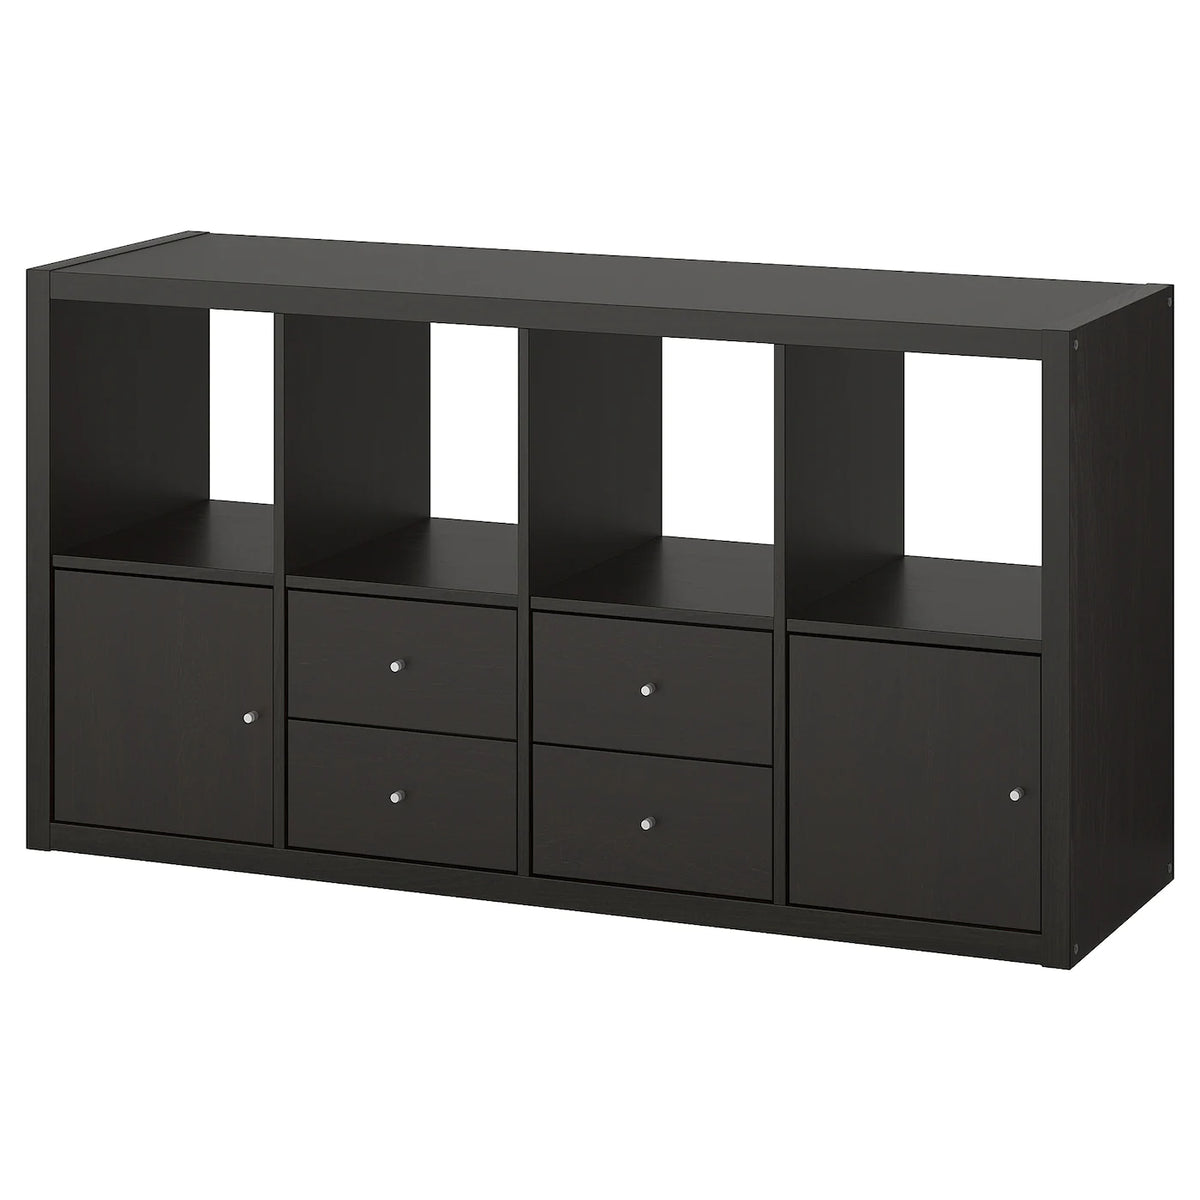 IKEA KALLAX 4x2 shelving with 2 drawers/2 doors, black-brown, 77x147 cm